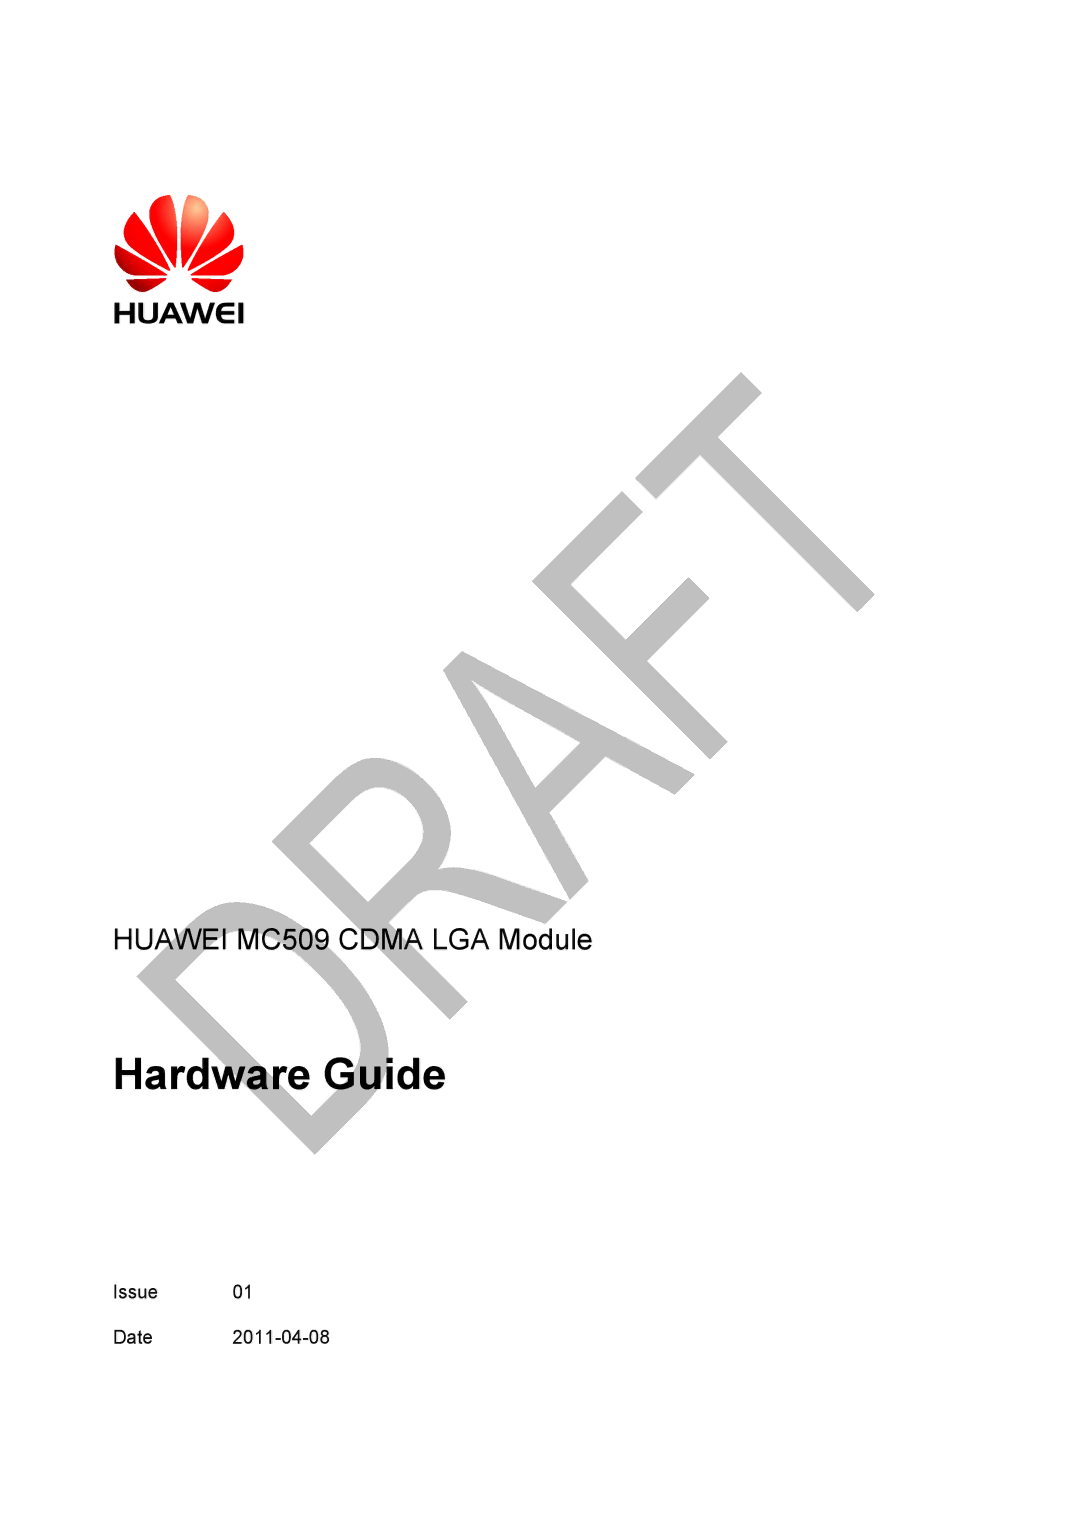 Huawei MC509 CDMA LGA manual Hardware Guide, Issue Date 